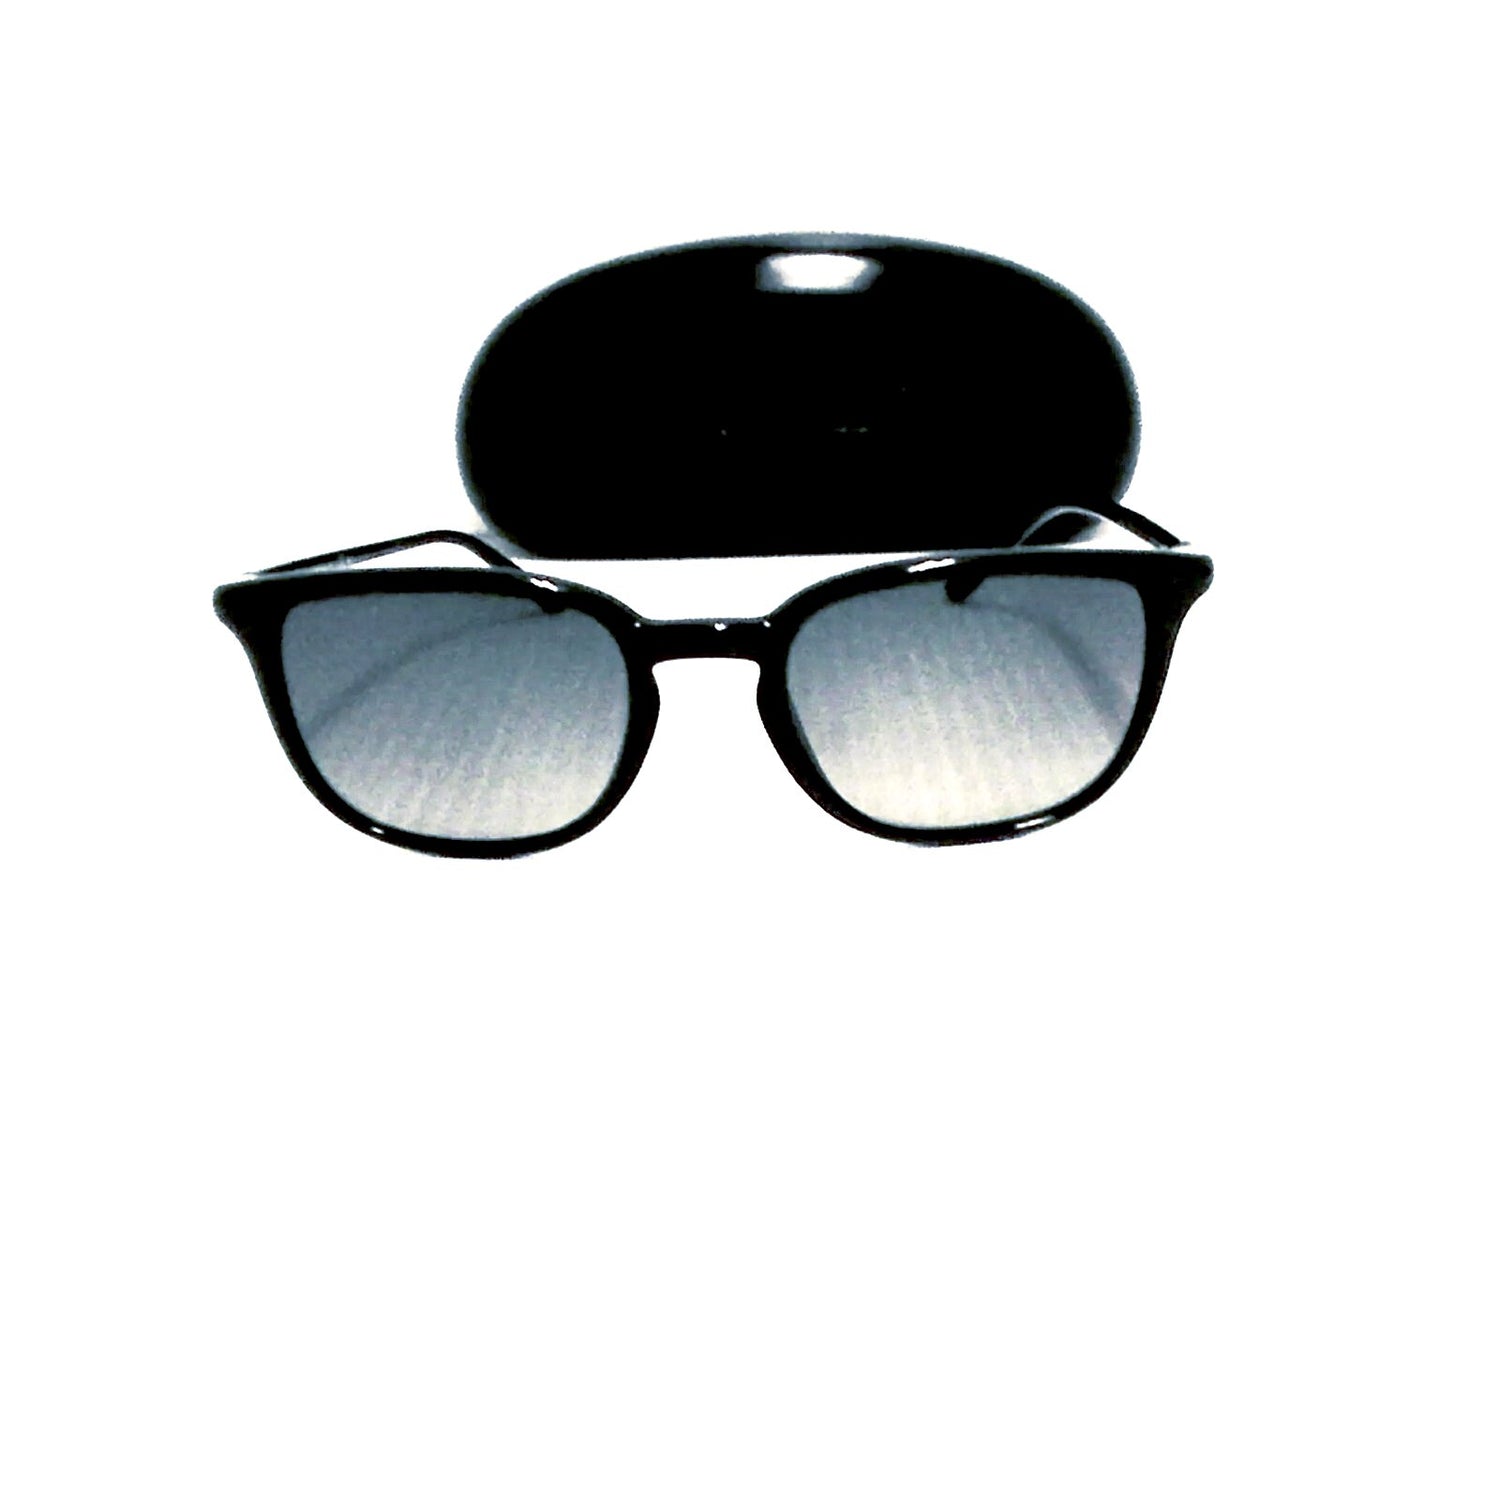 Gucci new Sunglasses GG 1067/s GVJWJ Polarized gray lenses black frame